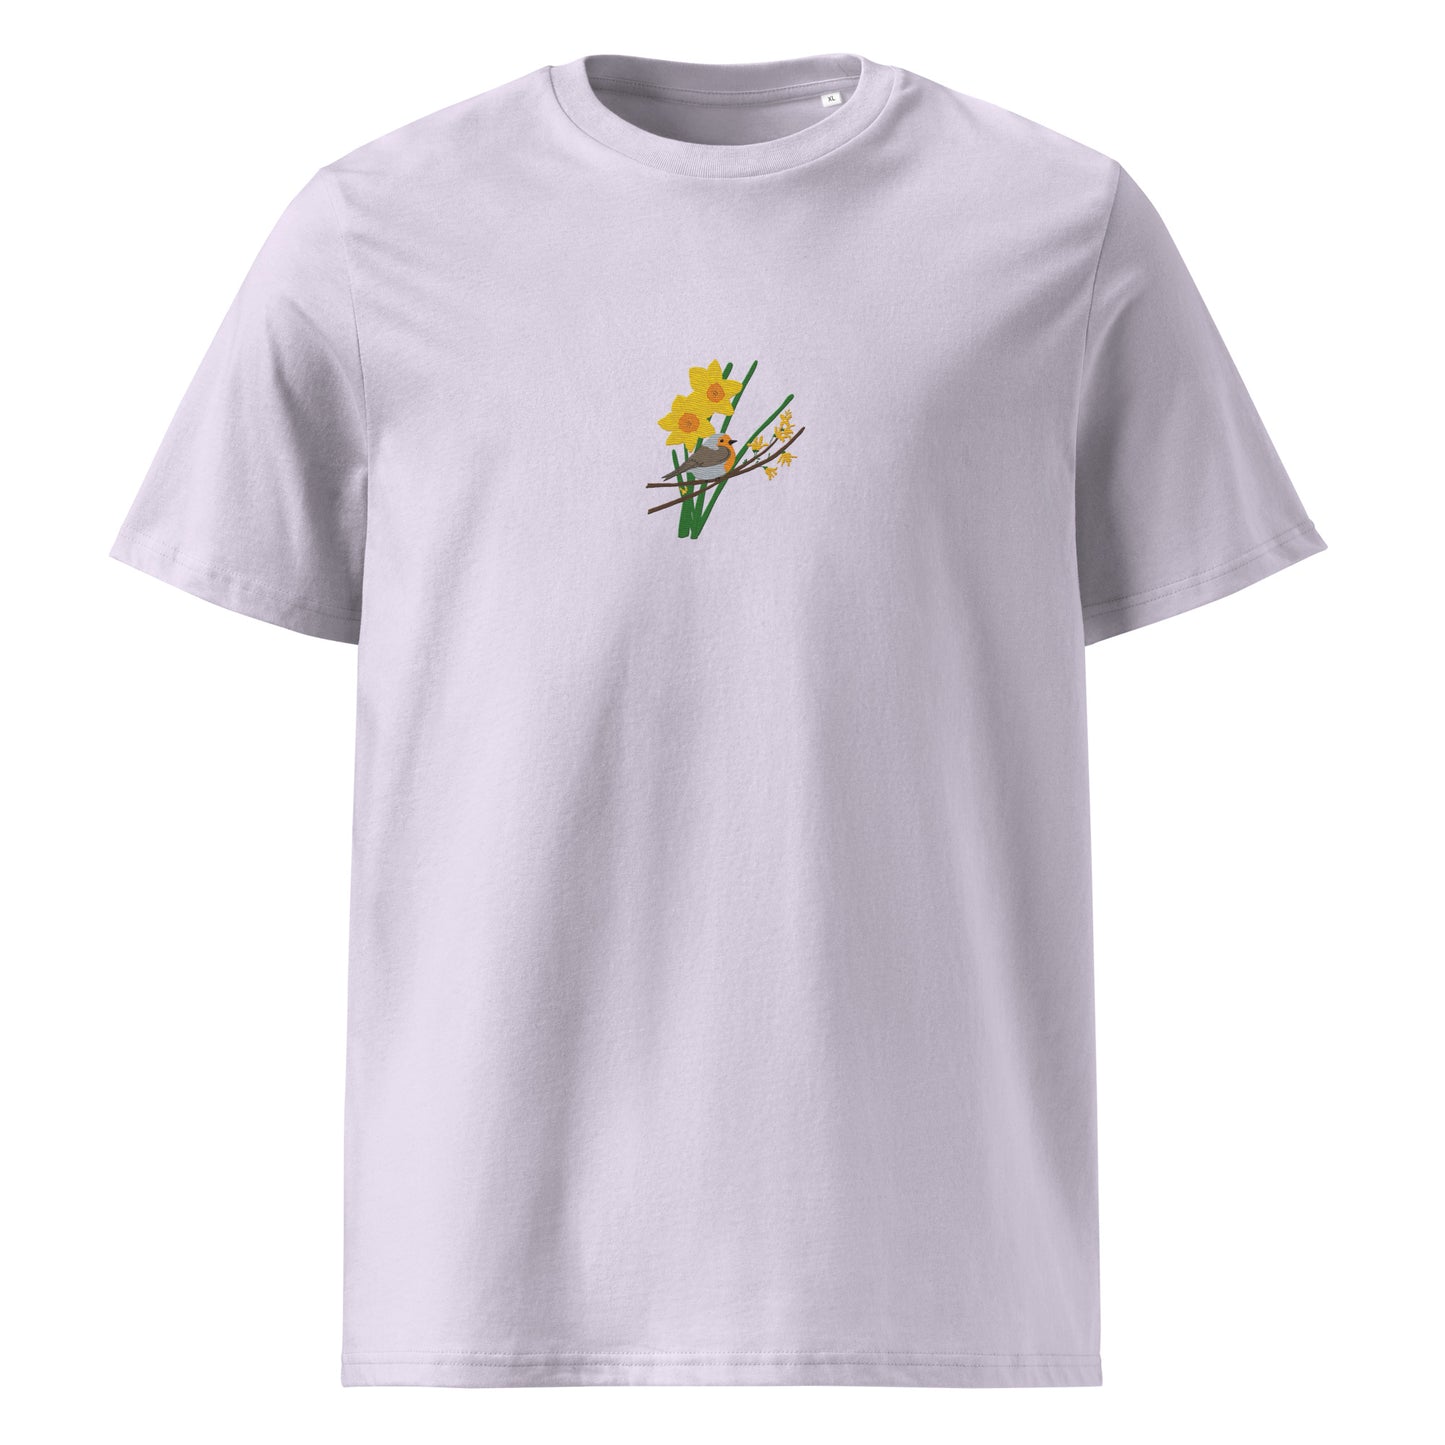 Robin and Daffodils - Unisex luomupuuvillainen t-paita